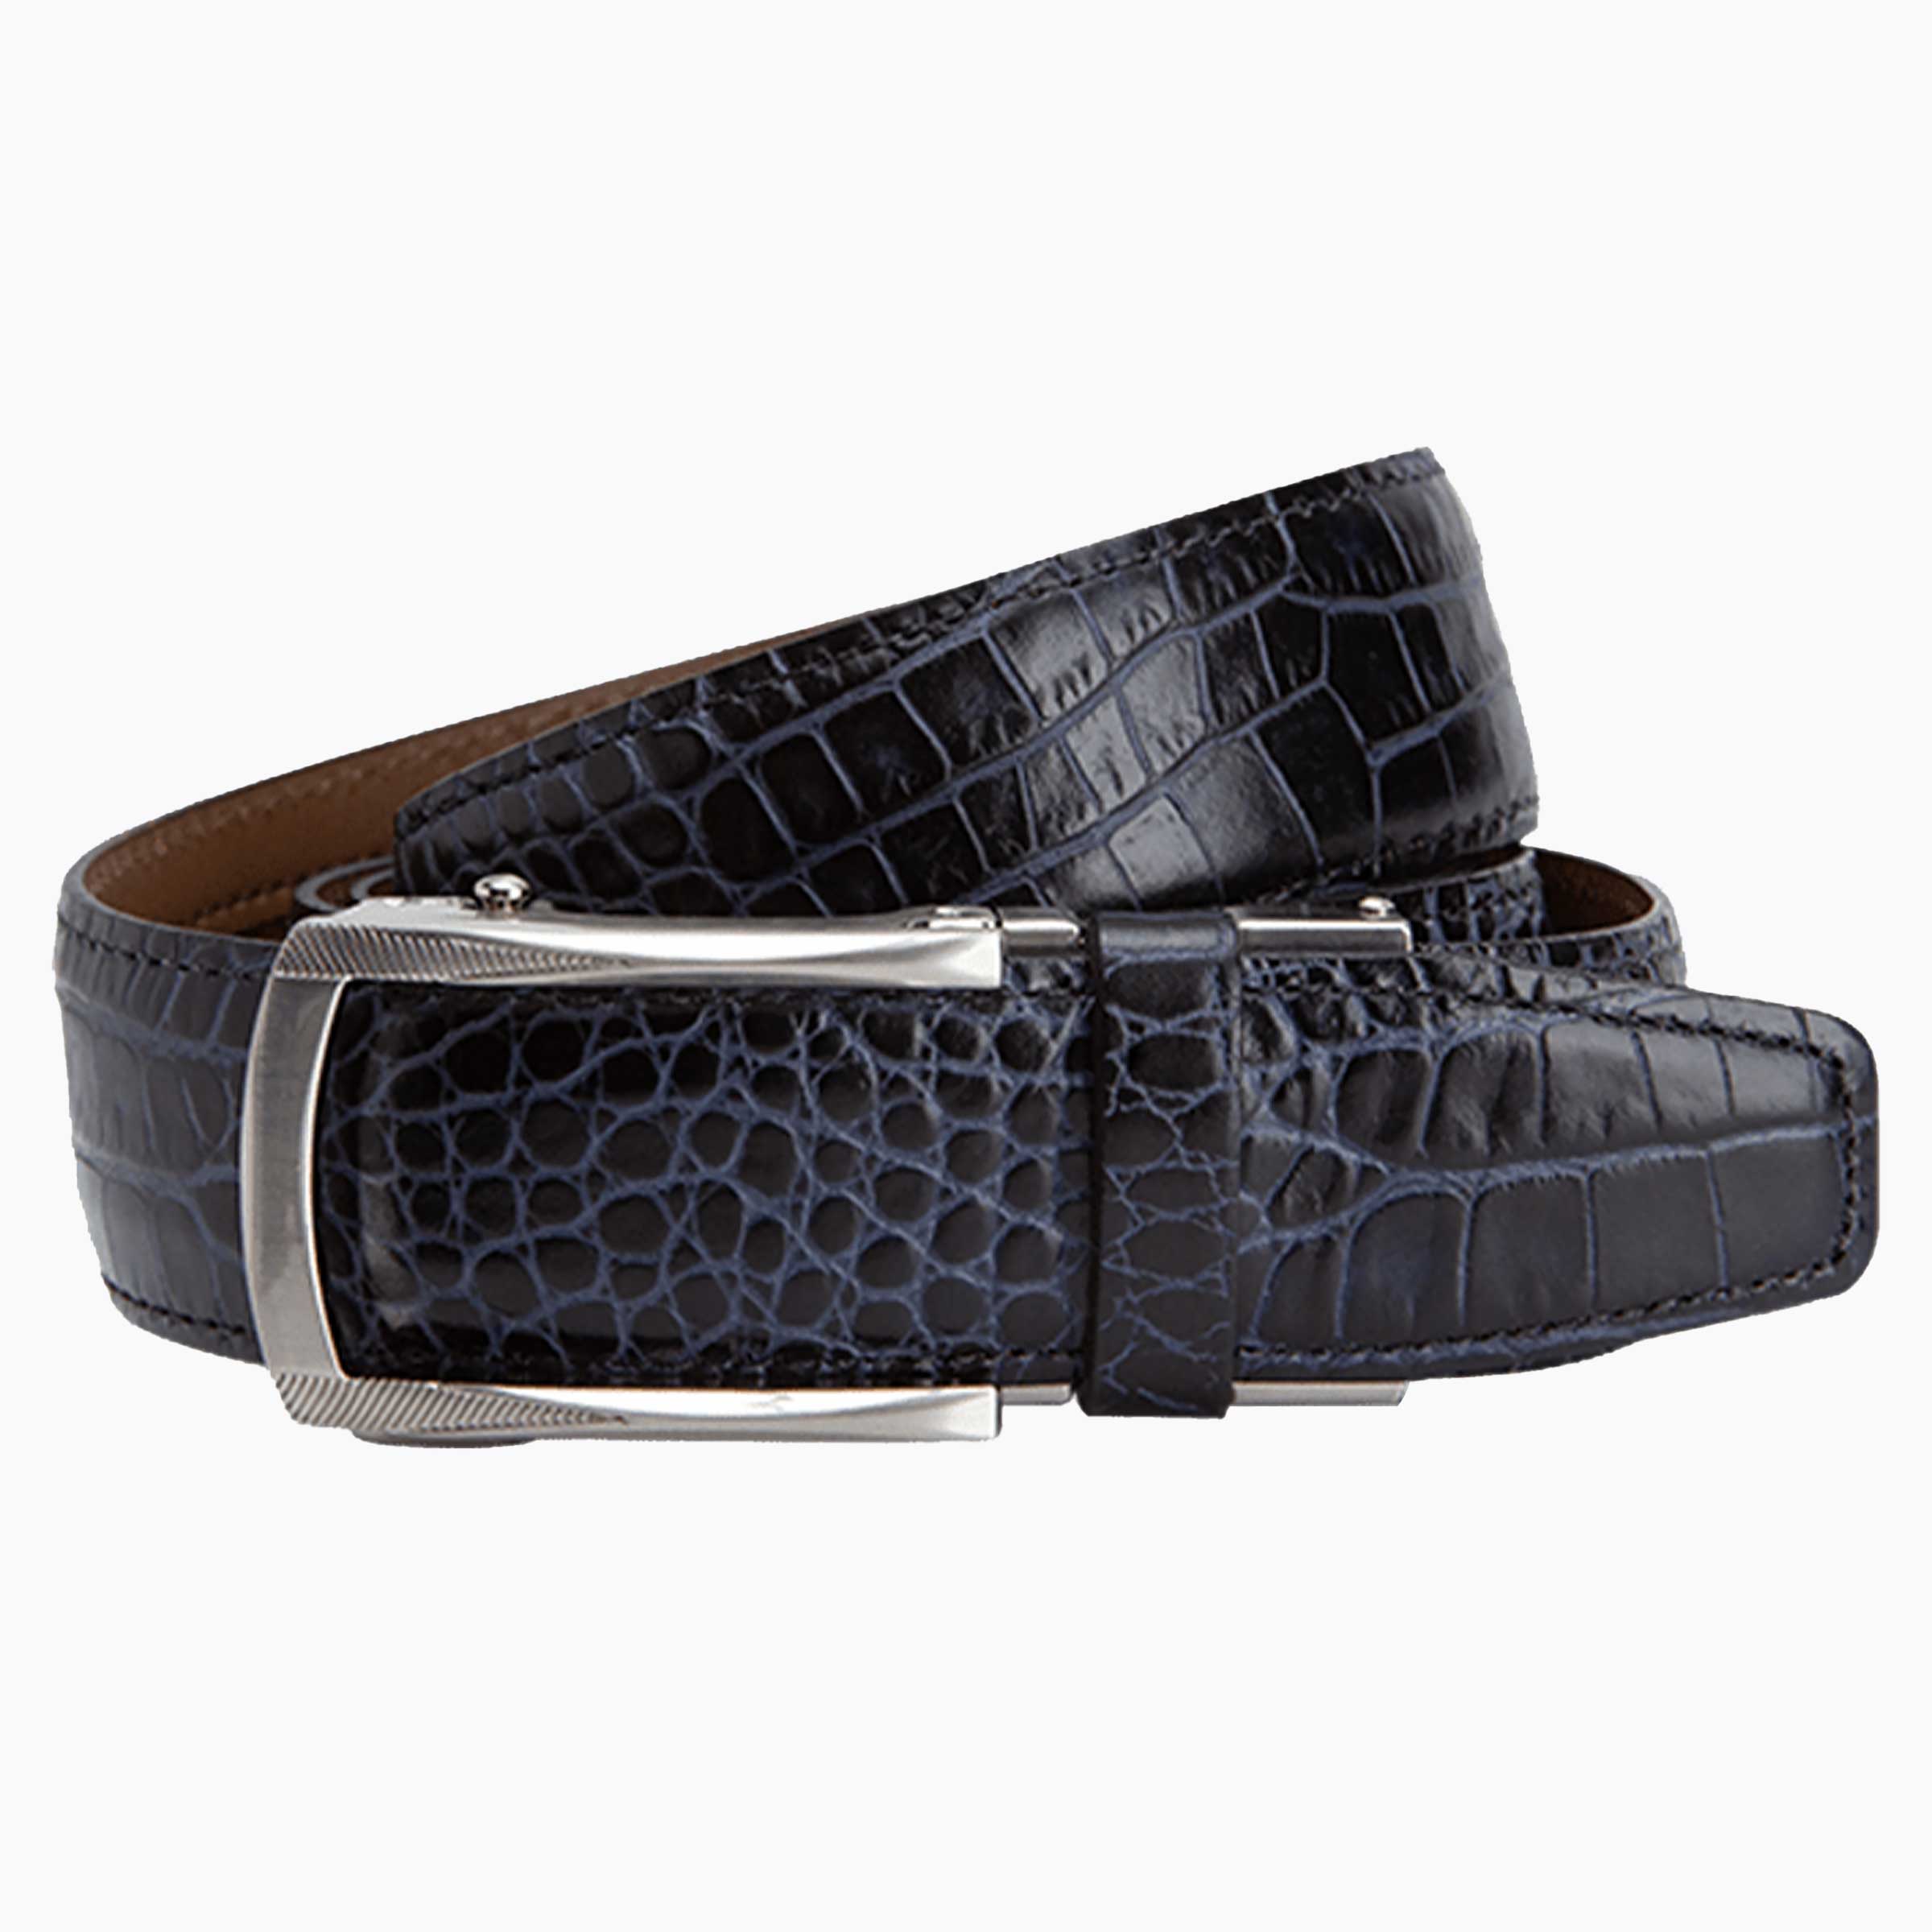 Kayiman Black and Blue, 1 3/8" Strap, Luxury Belt